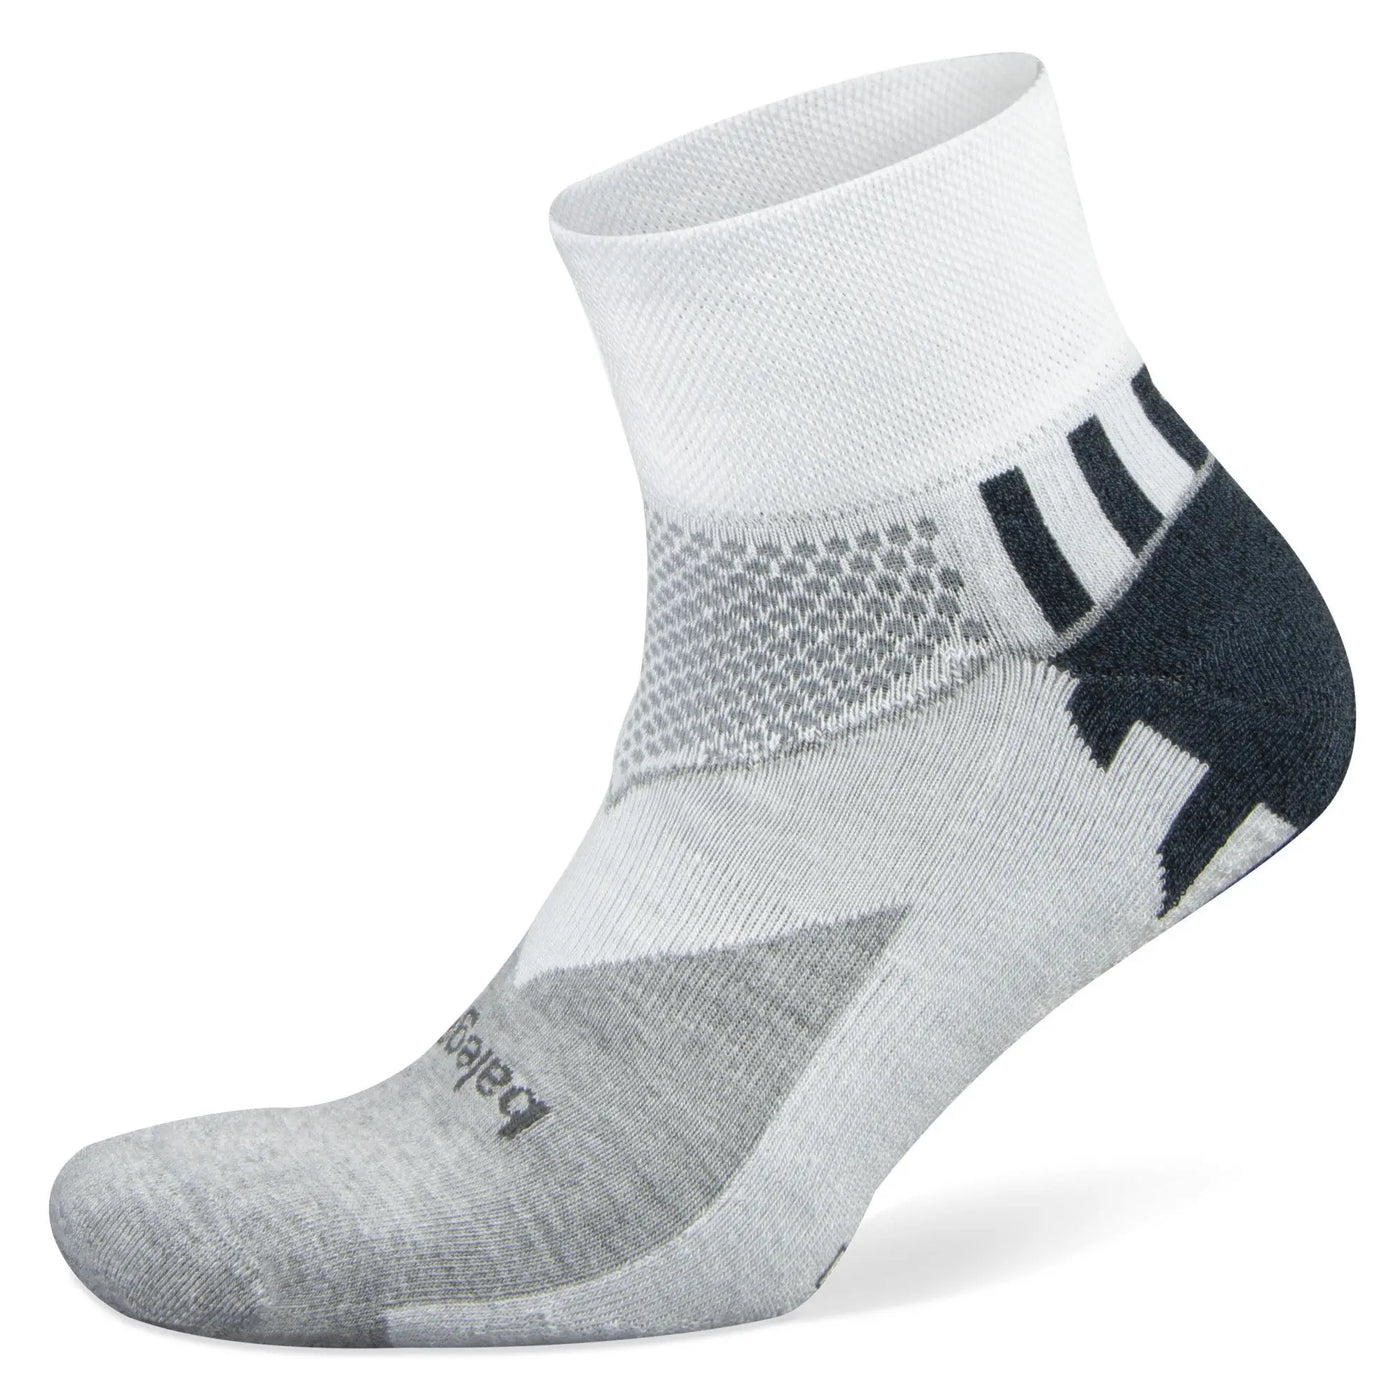 Balega Enduro Quarter Running Socks - BALE-8537-2332